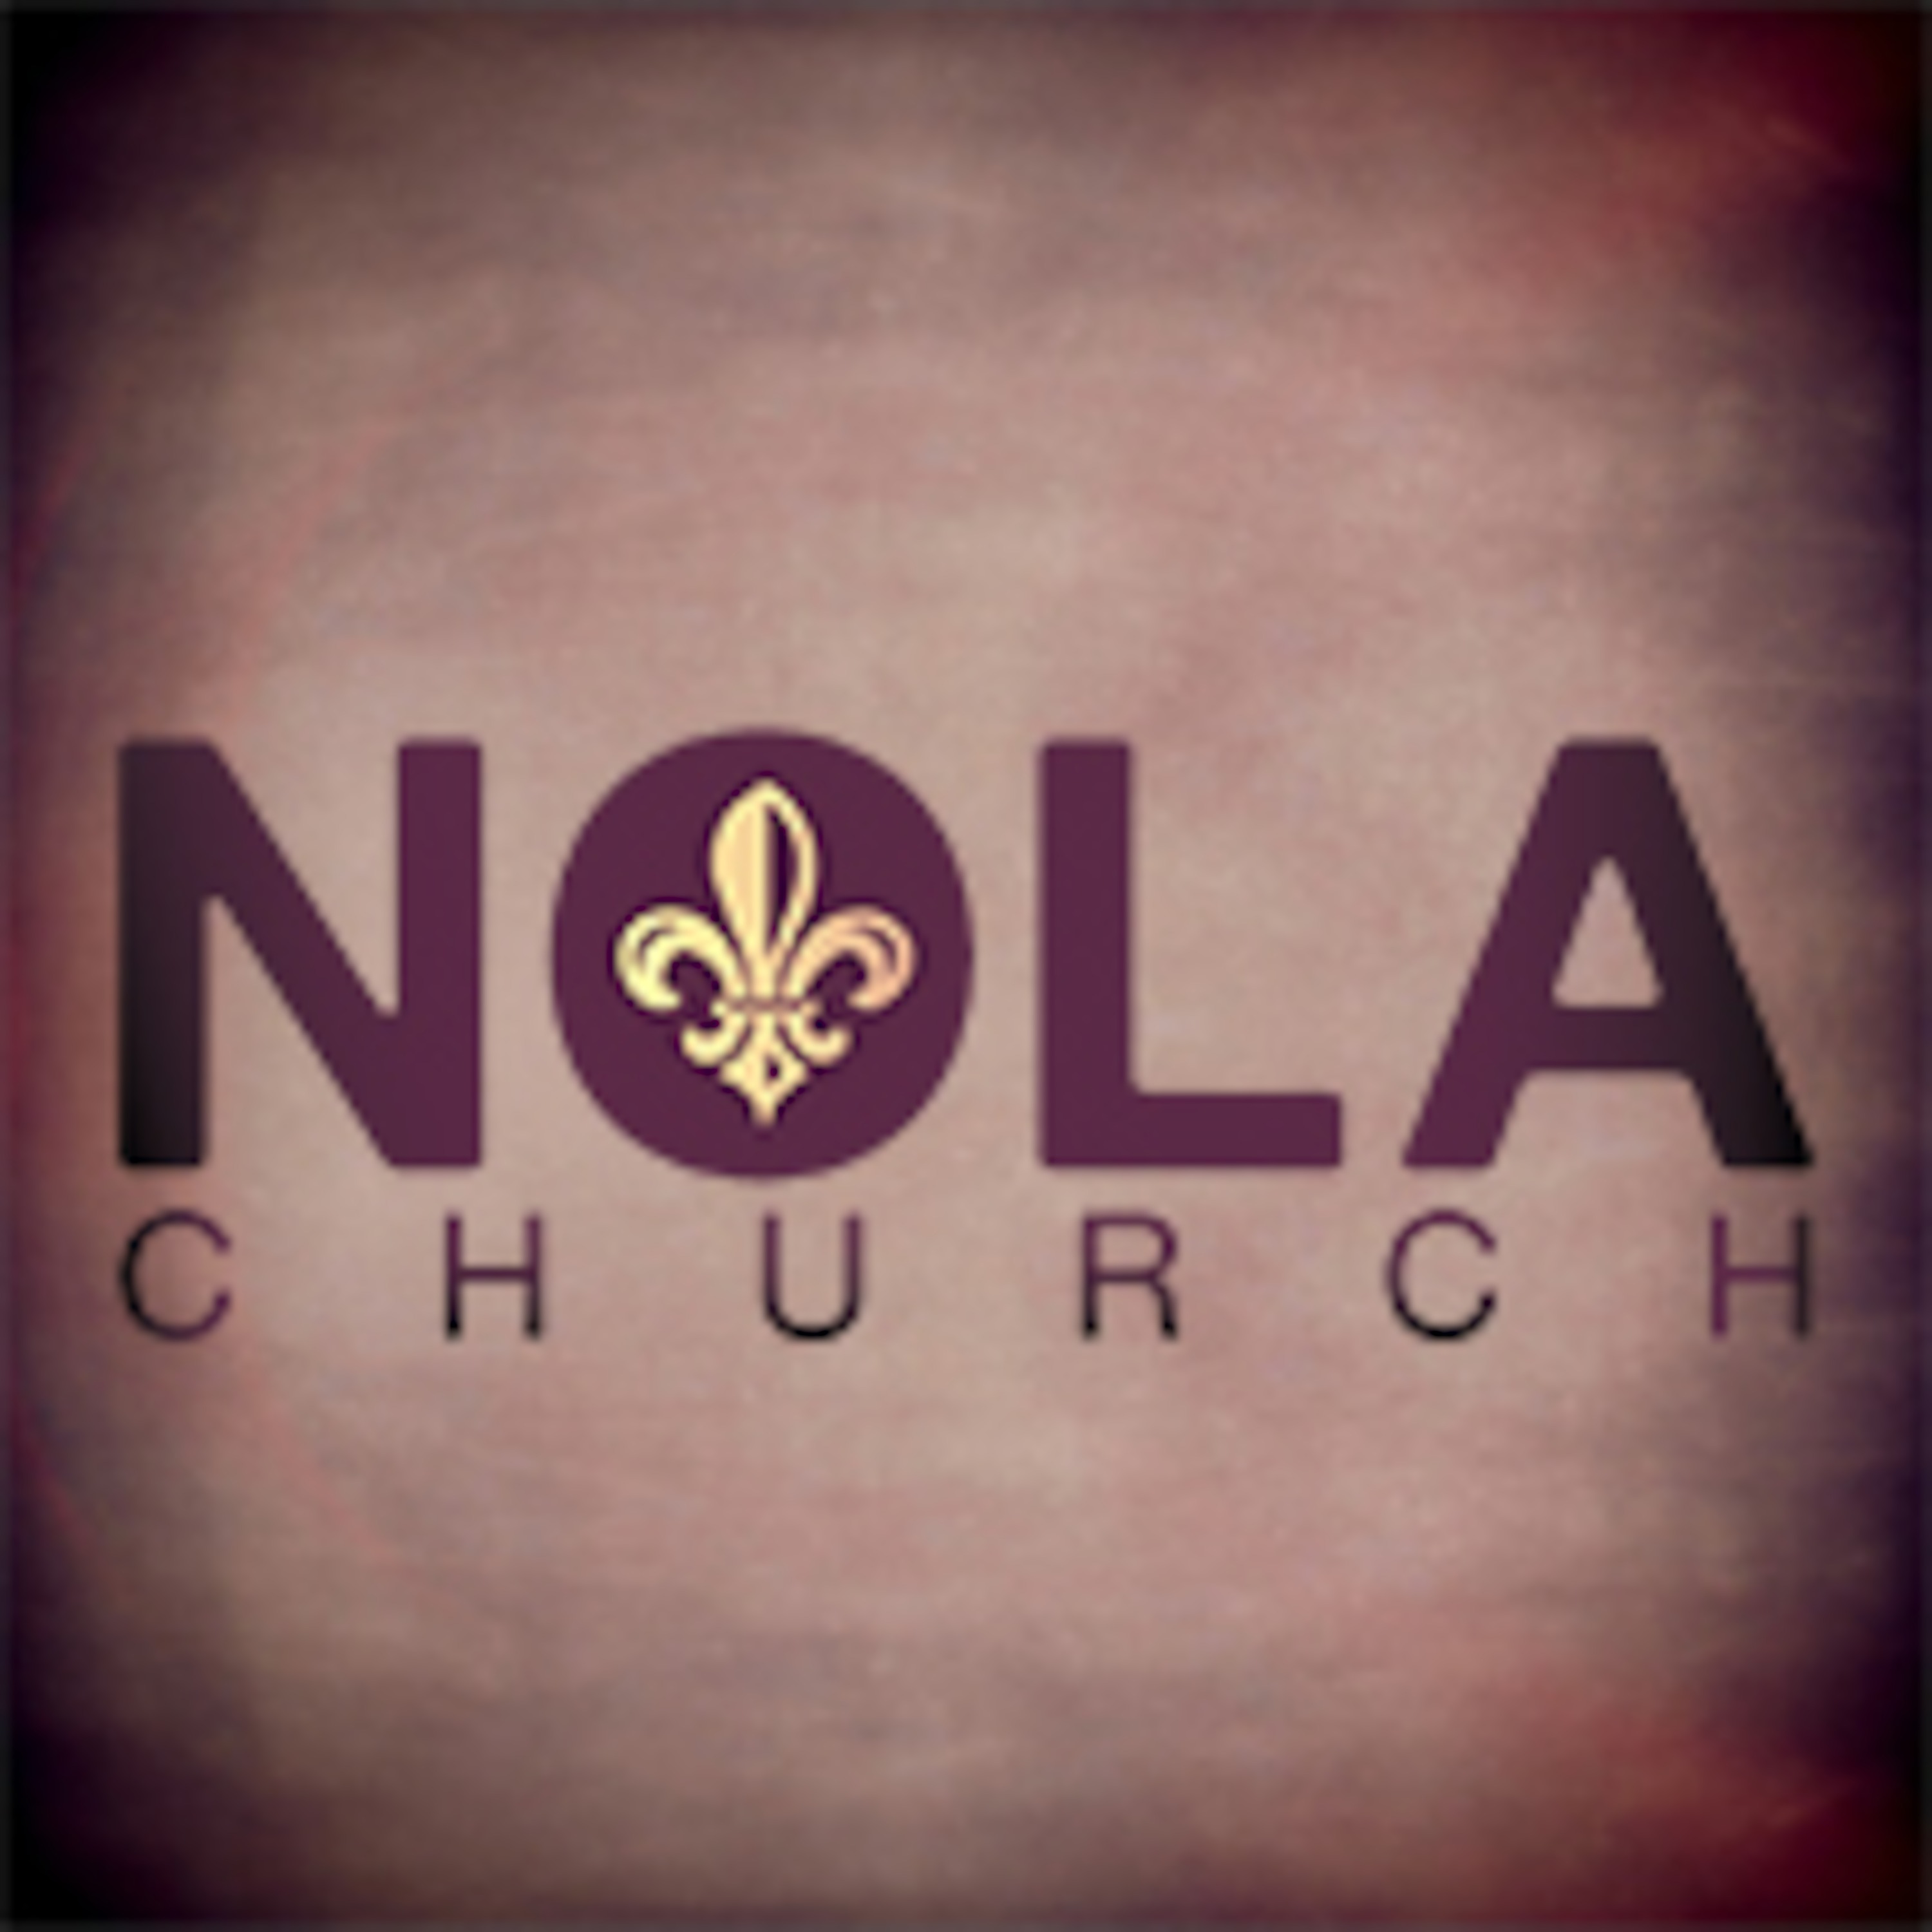 NOLA Church's Podcast